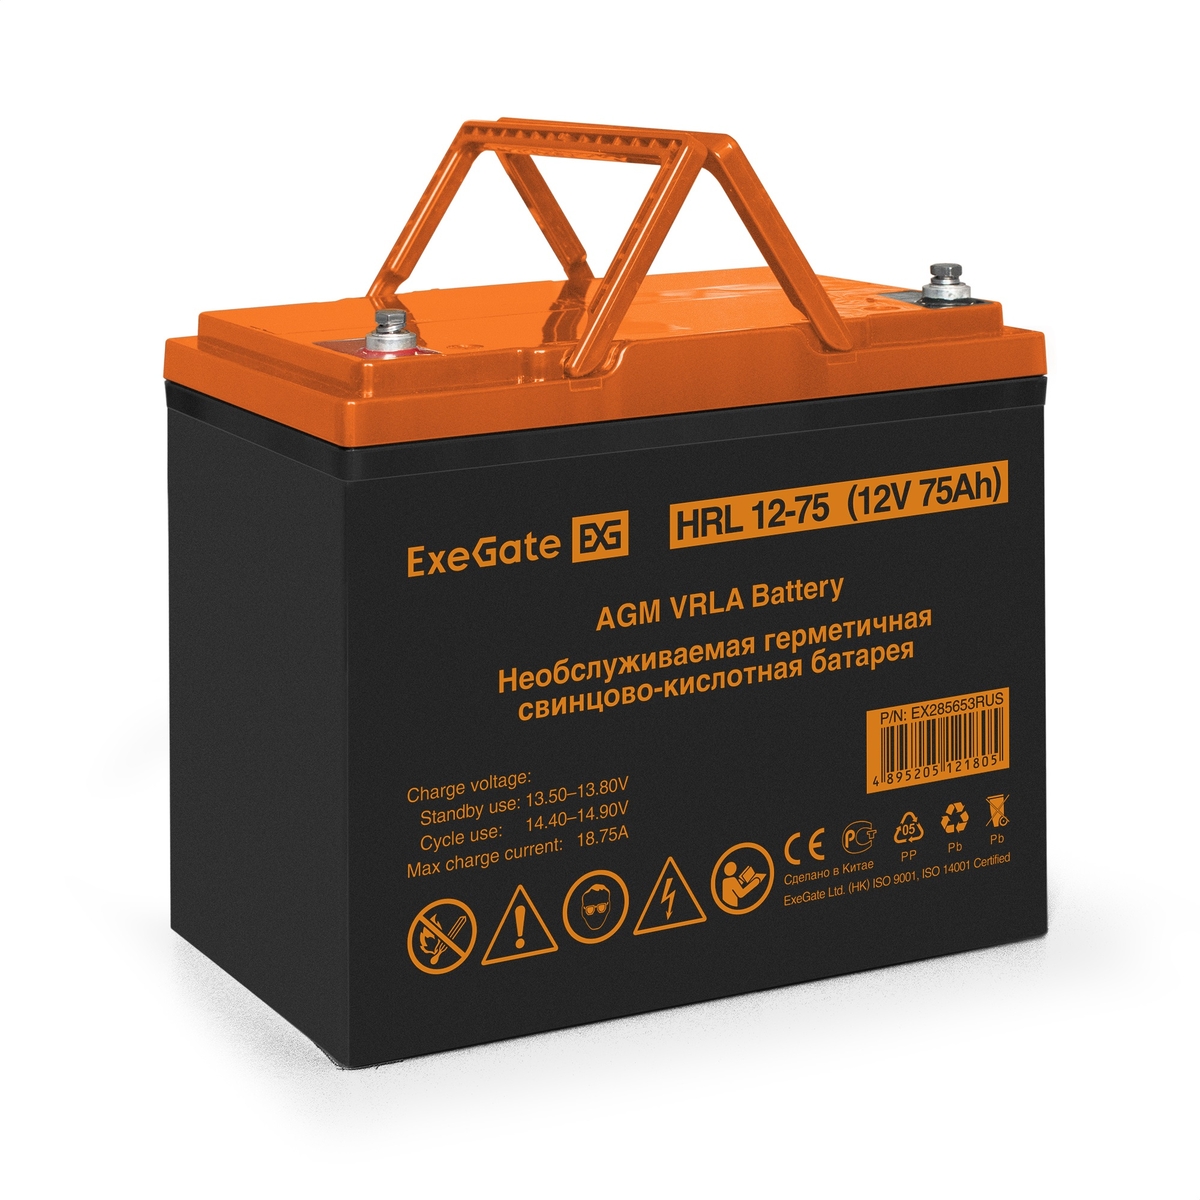 UPS set EX296001 + battery 75Ah EX285653 2 piece